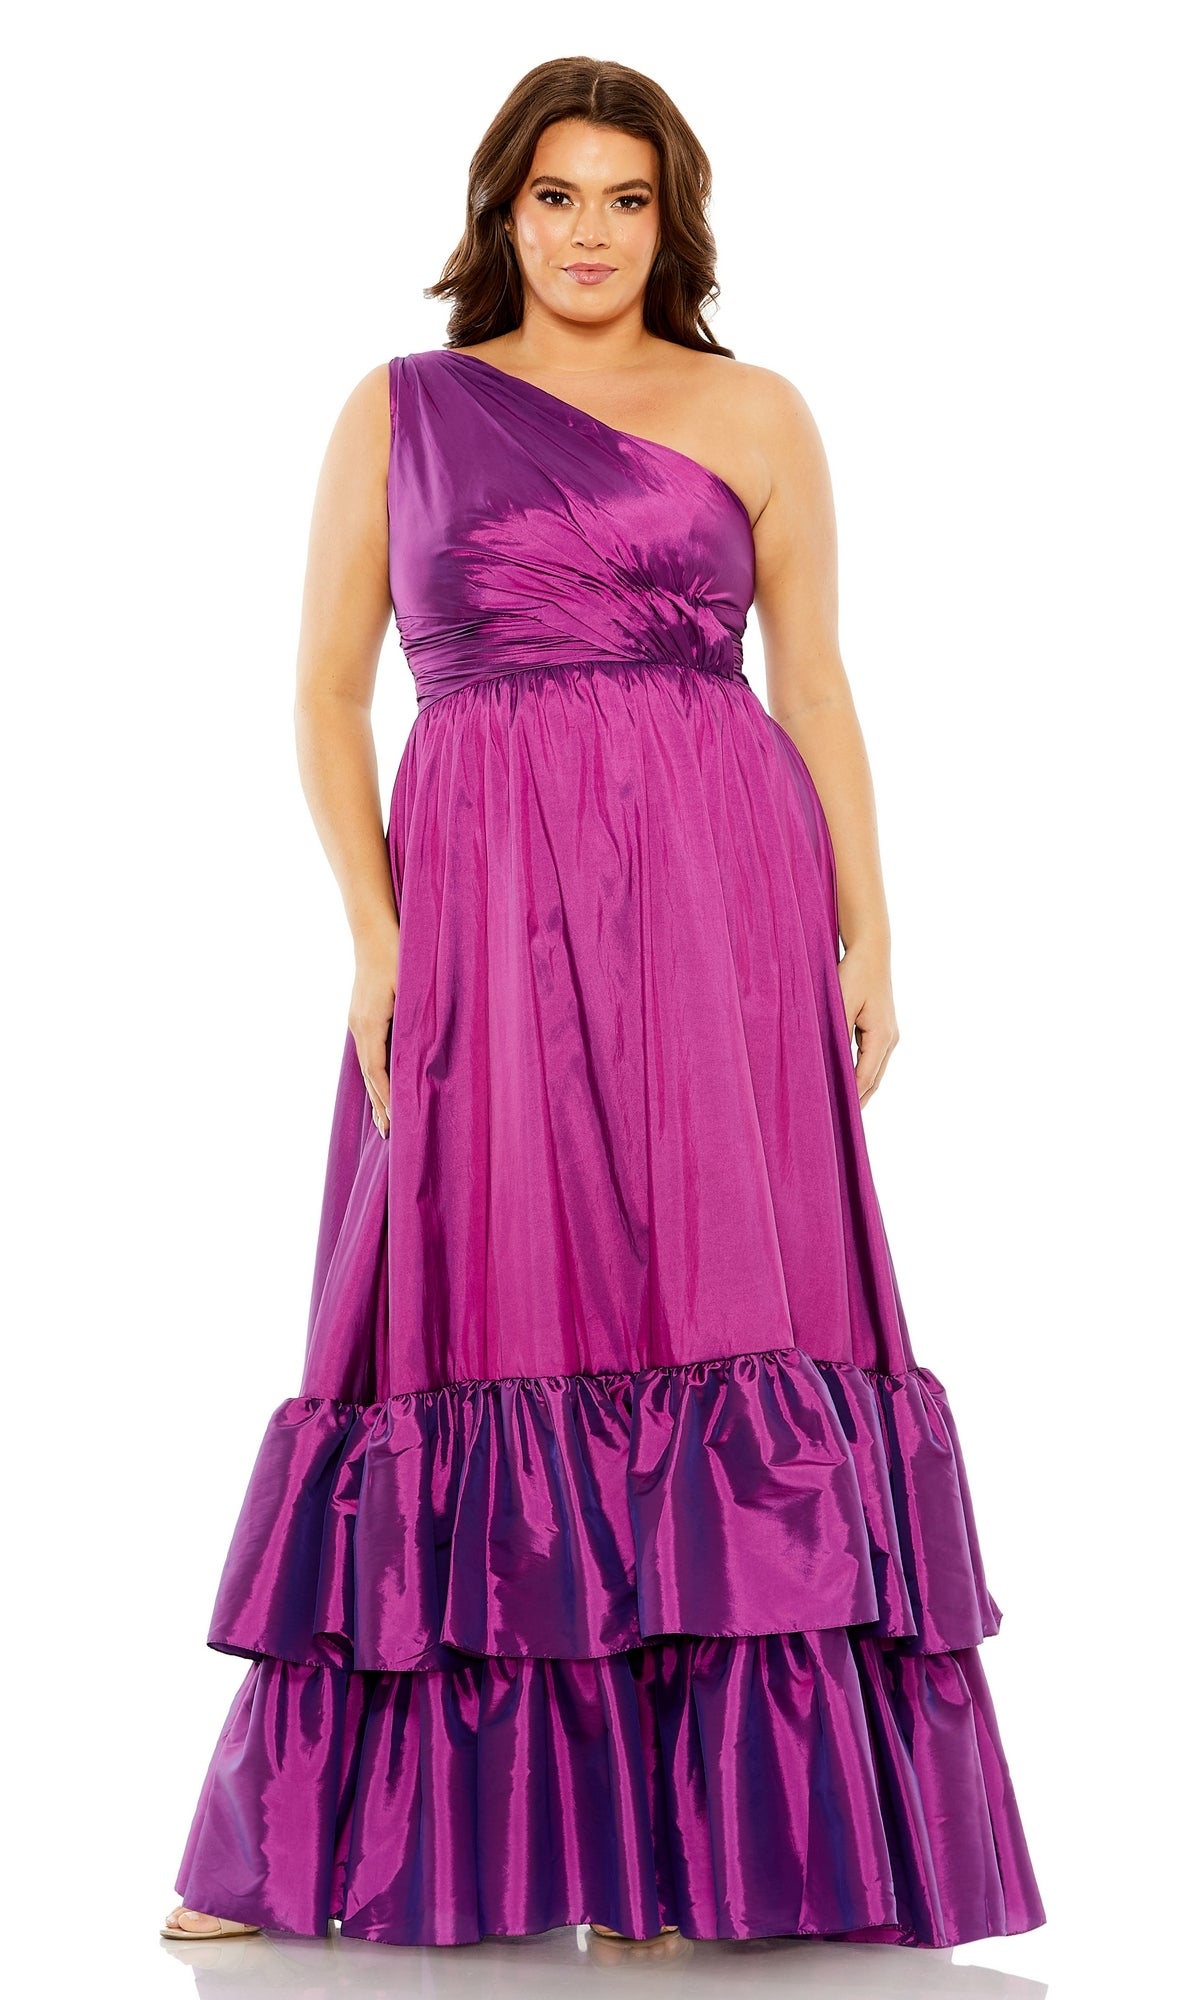 Long Plus-Size Formal Dress 68527 by Mac Duggal